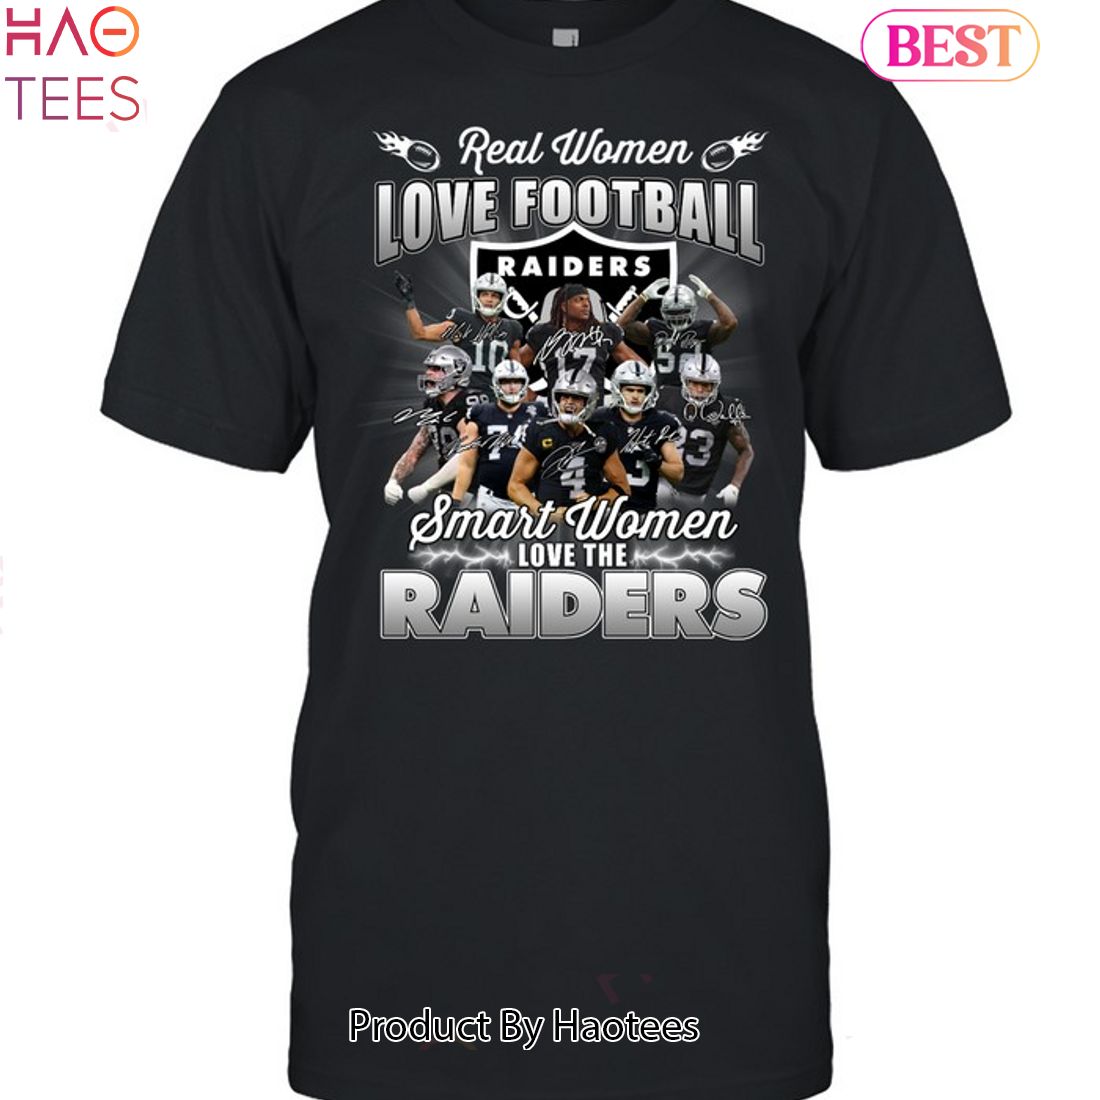 Official Ladies Las Vegas Raiders Apparel & Merchandise